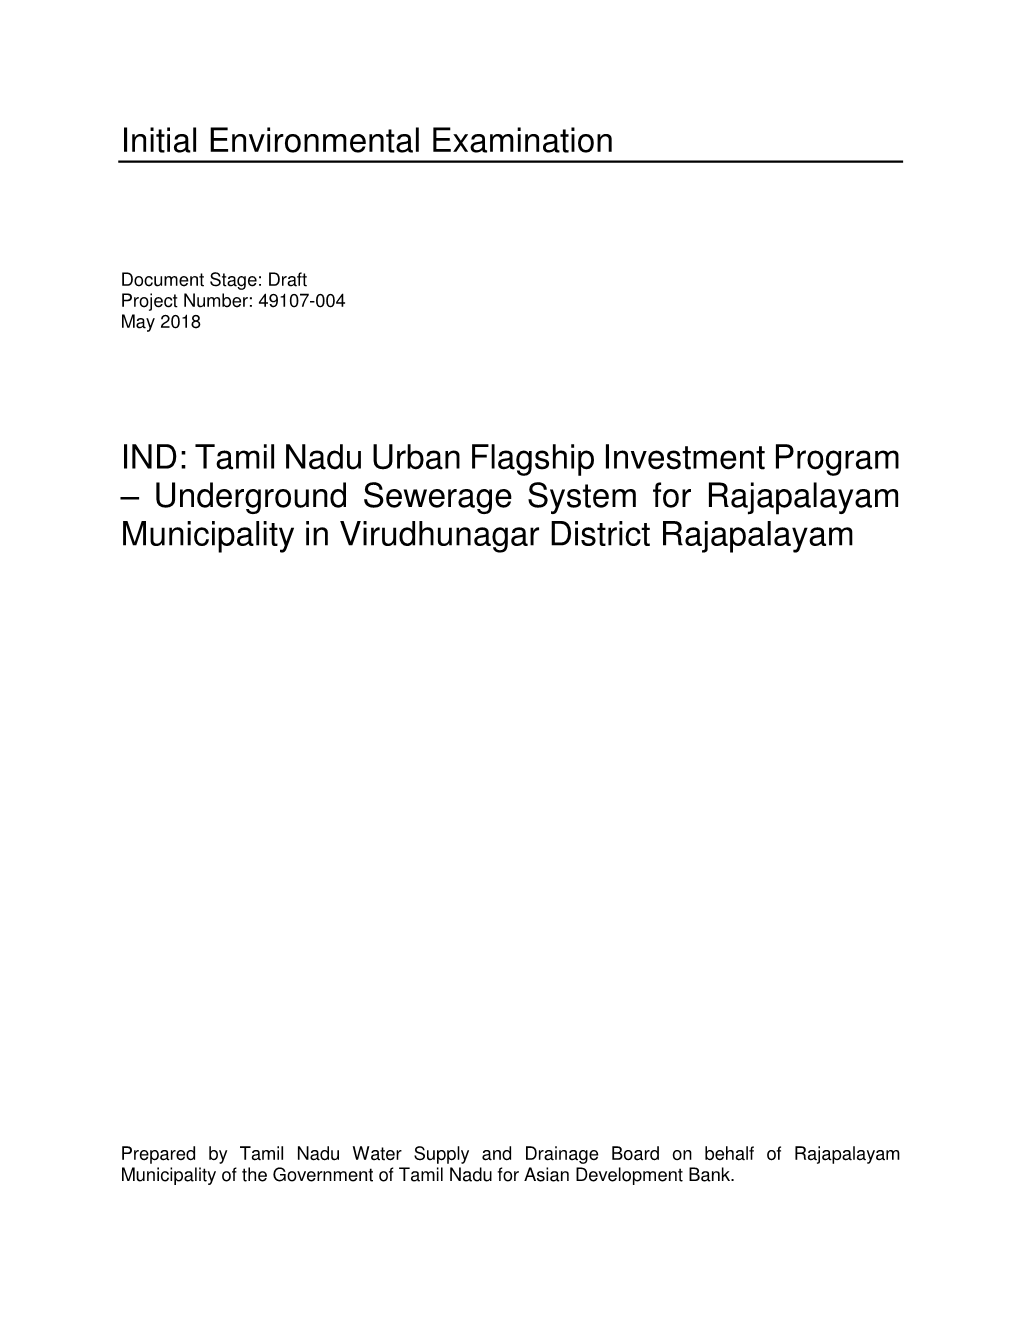 Underground Sewerage System for Rajapalayam Municipality in Virudhunagar District Rajapalayam